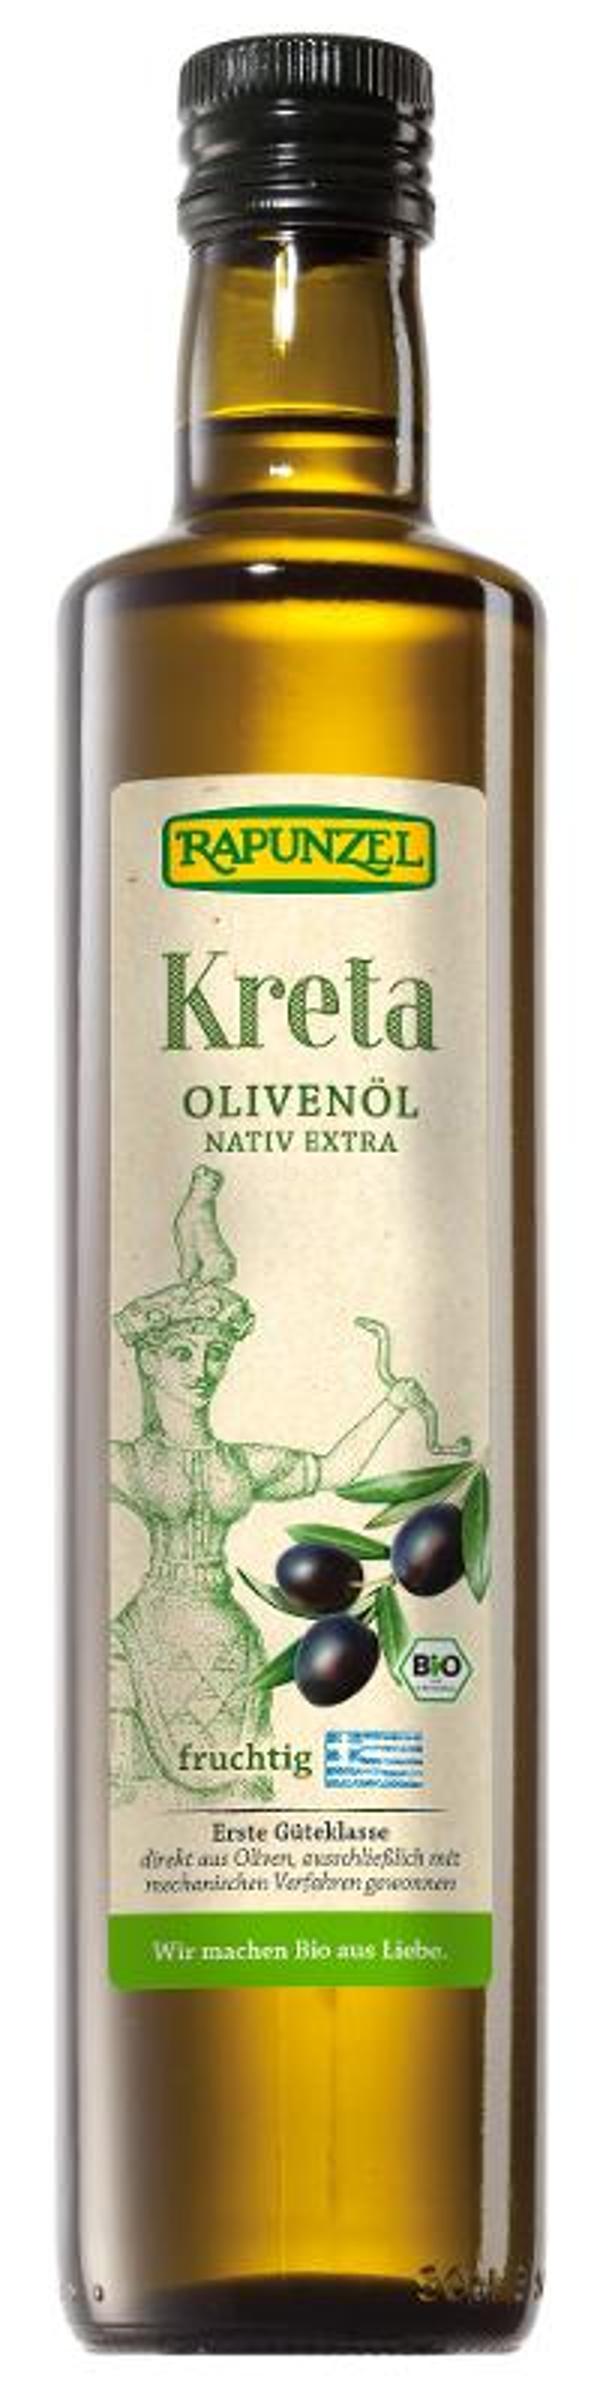 Produktfoto zu Olivenöl Kreta nativ 0,5L